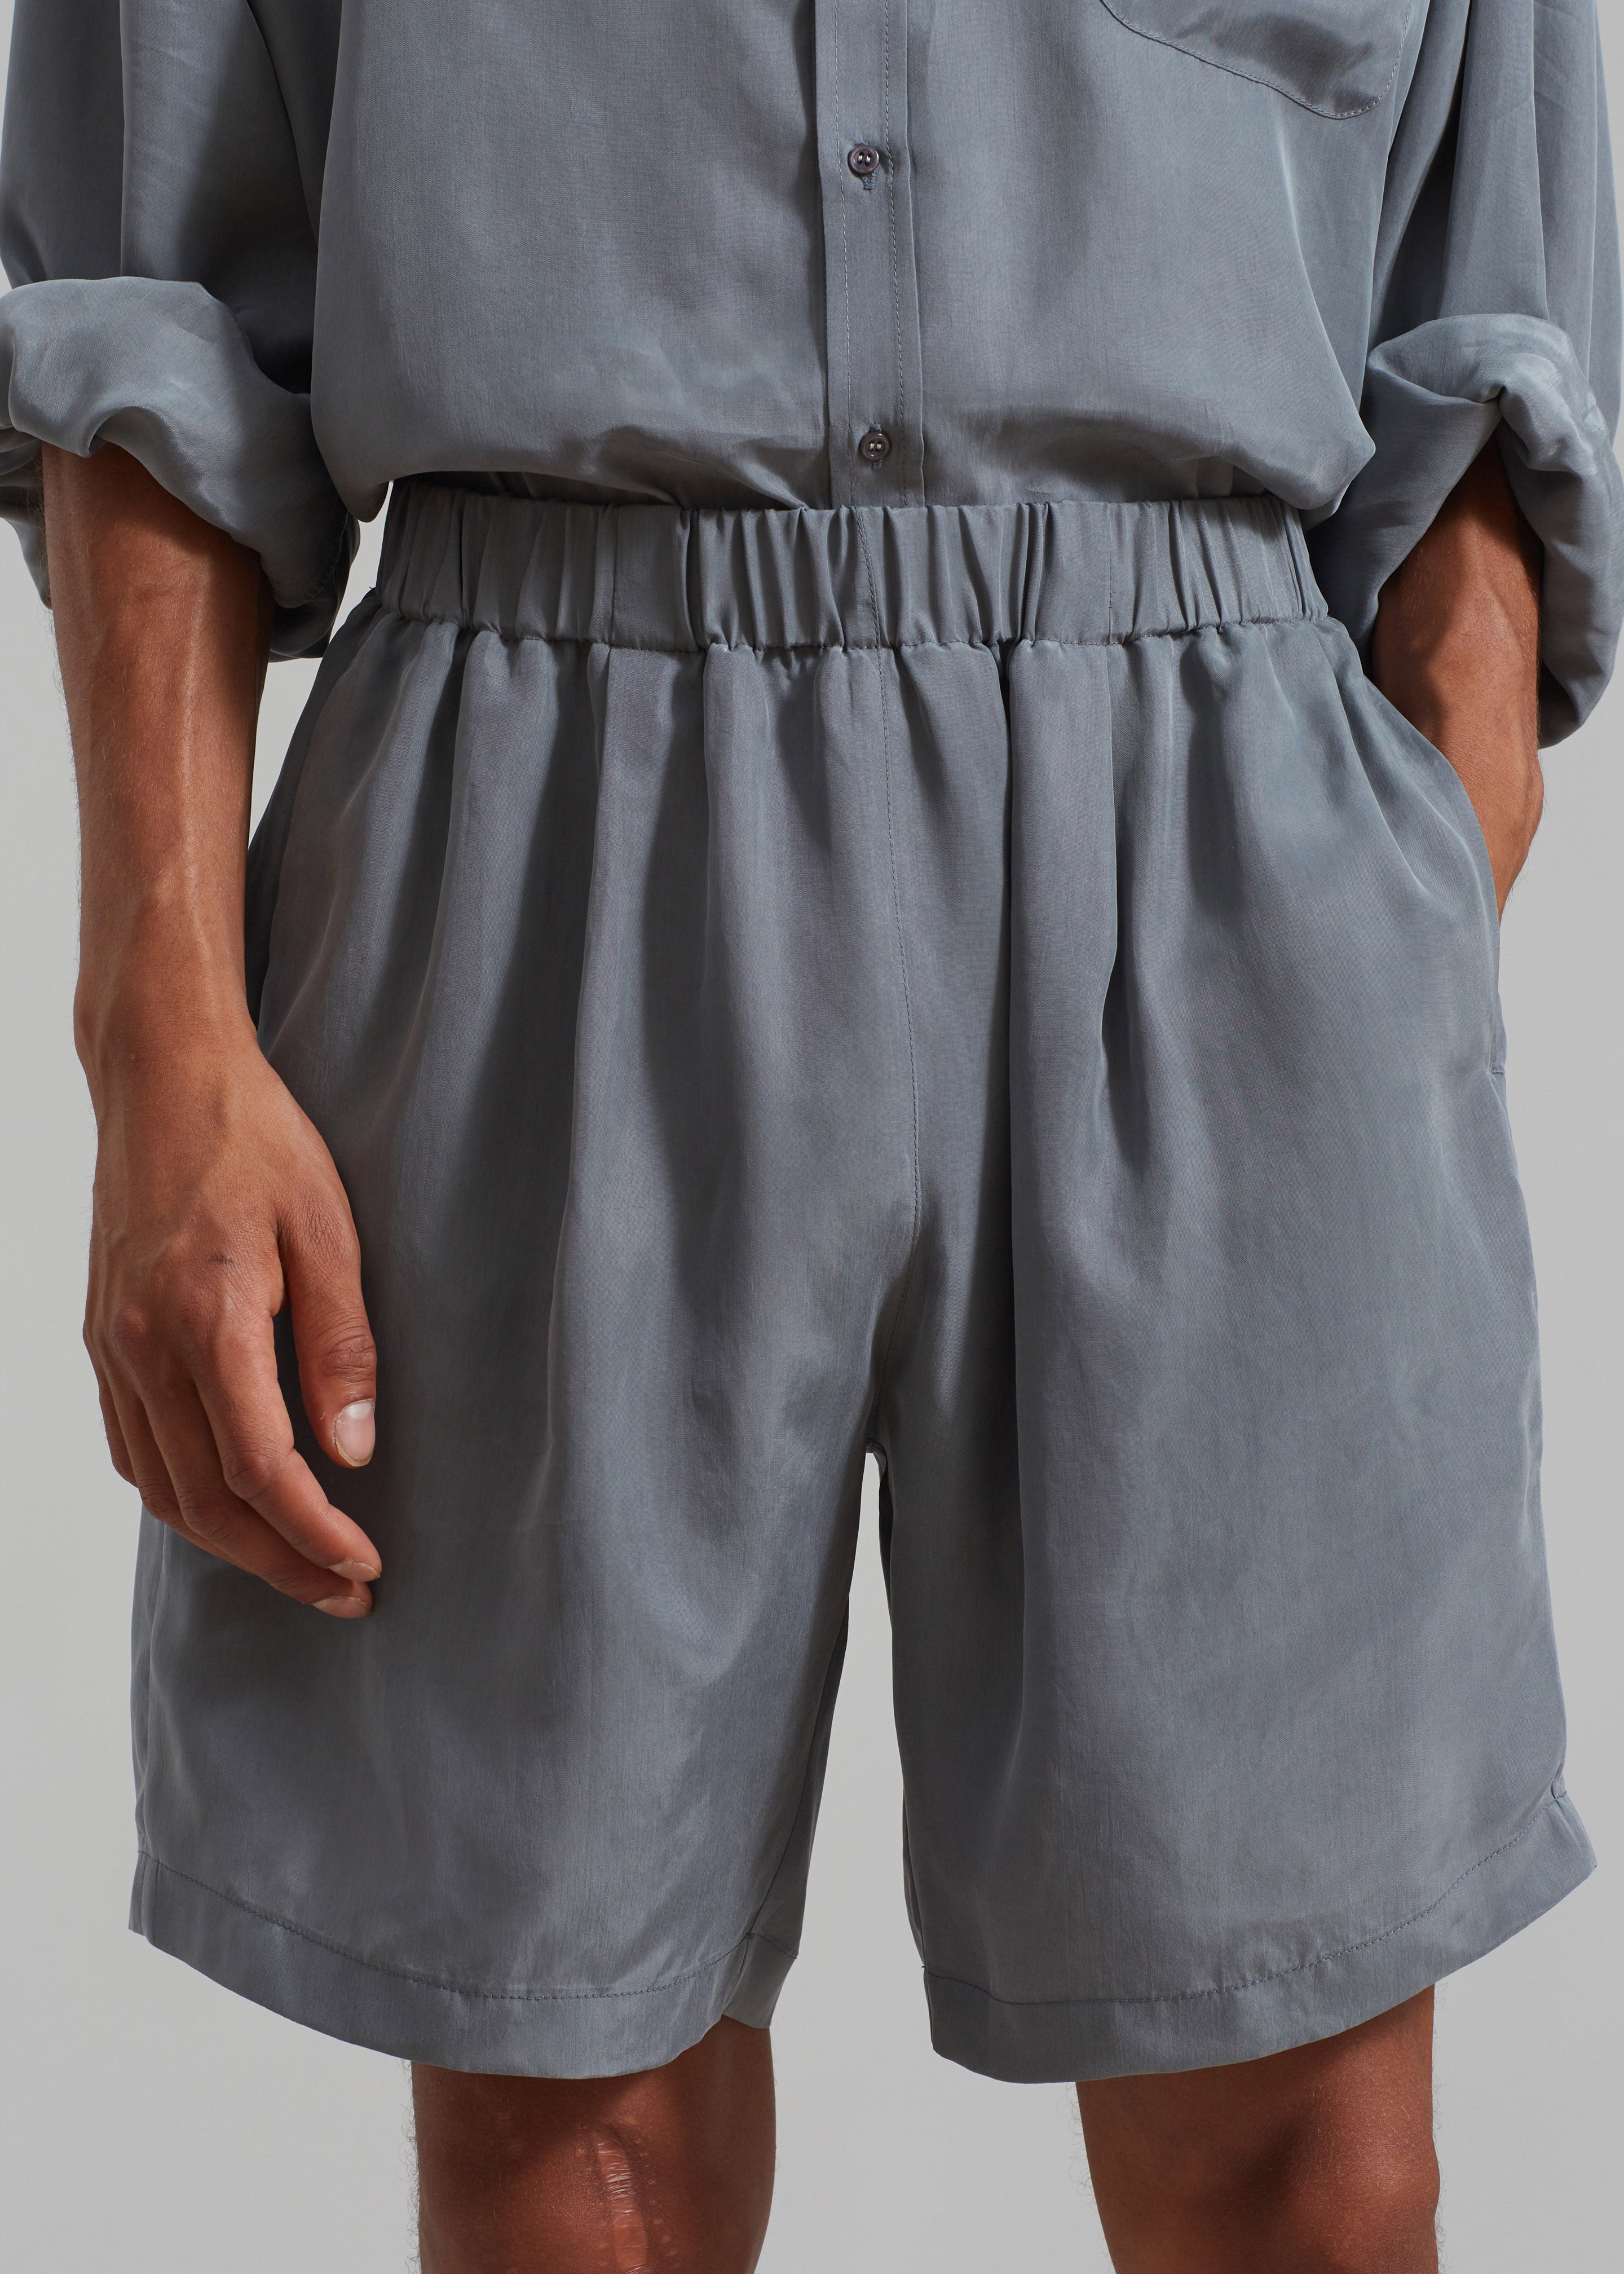 Leland Silky Boxer Shorts - Charcoal - 3